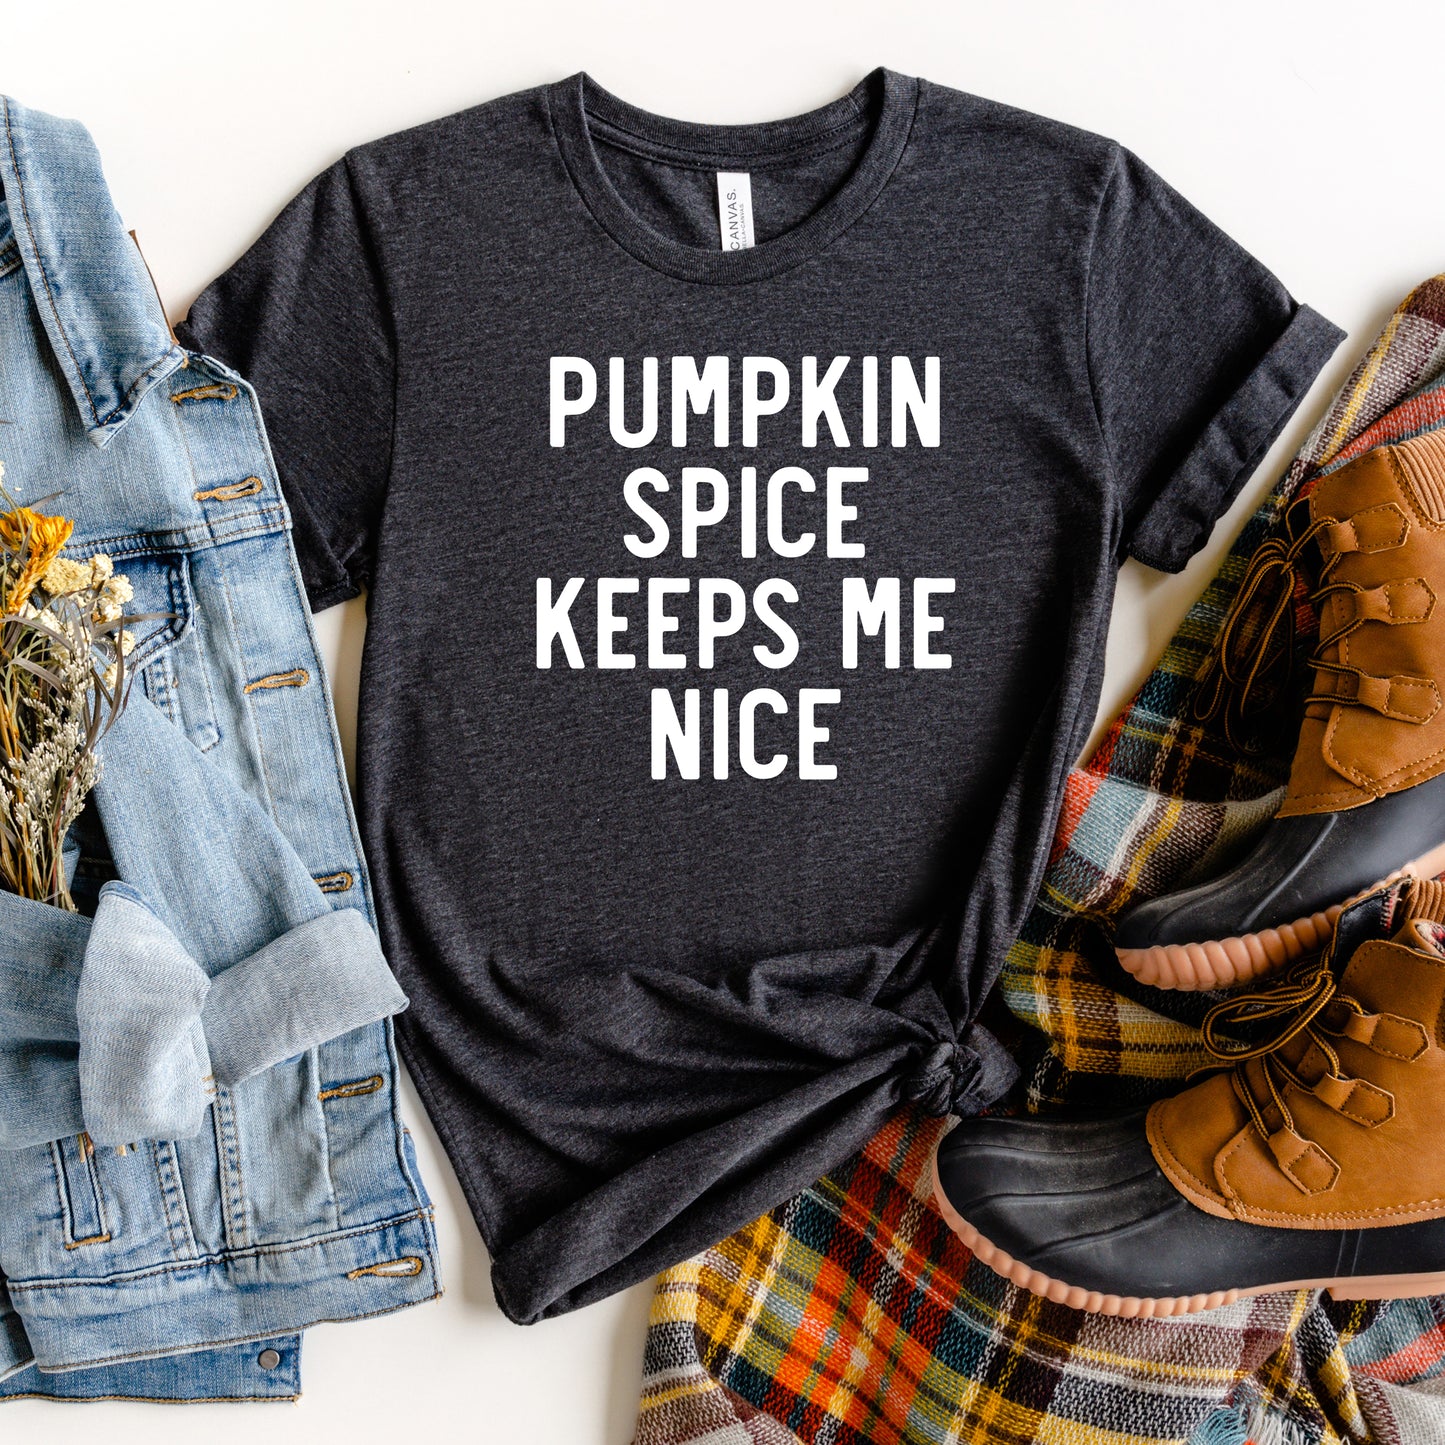 Pumpkin Spice Keeps Me Nice | Short Sleeve Graphic Tee